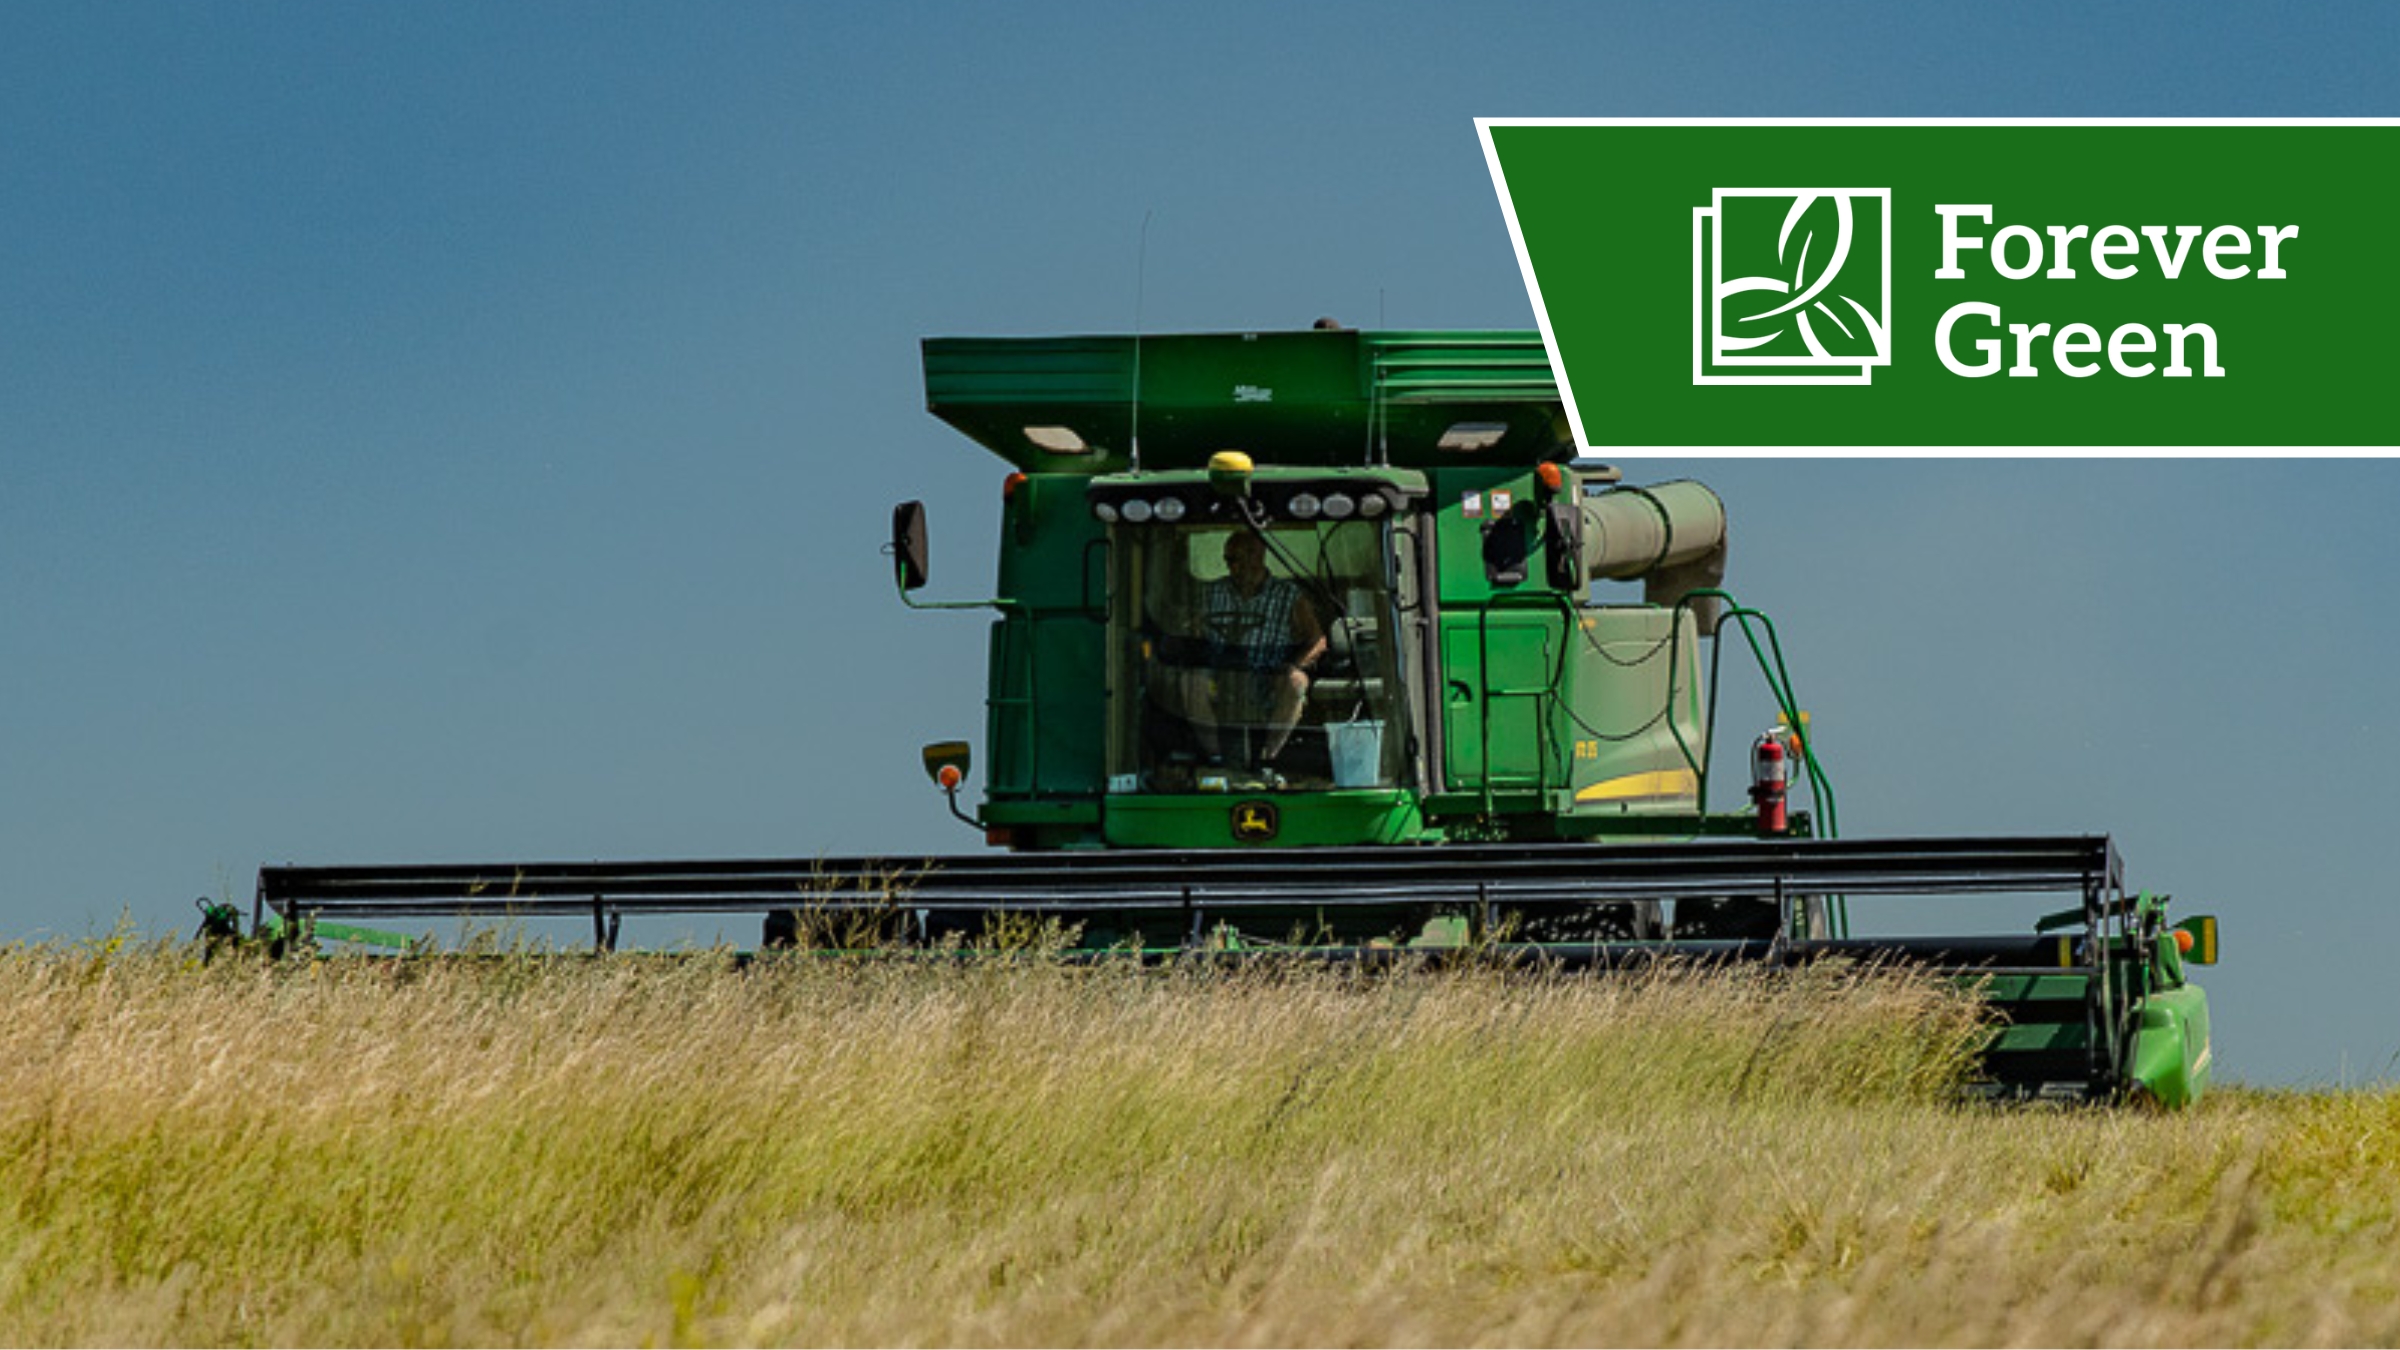 A piece of green farm machinery harvesting in a field of golden Kernza Intermediate Wheatgrass.